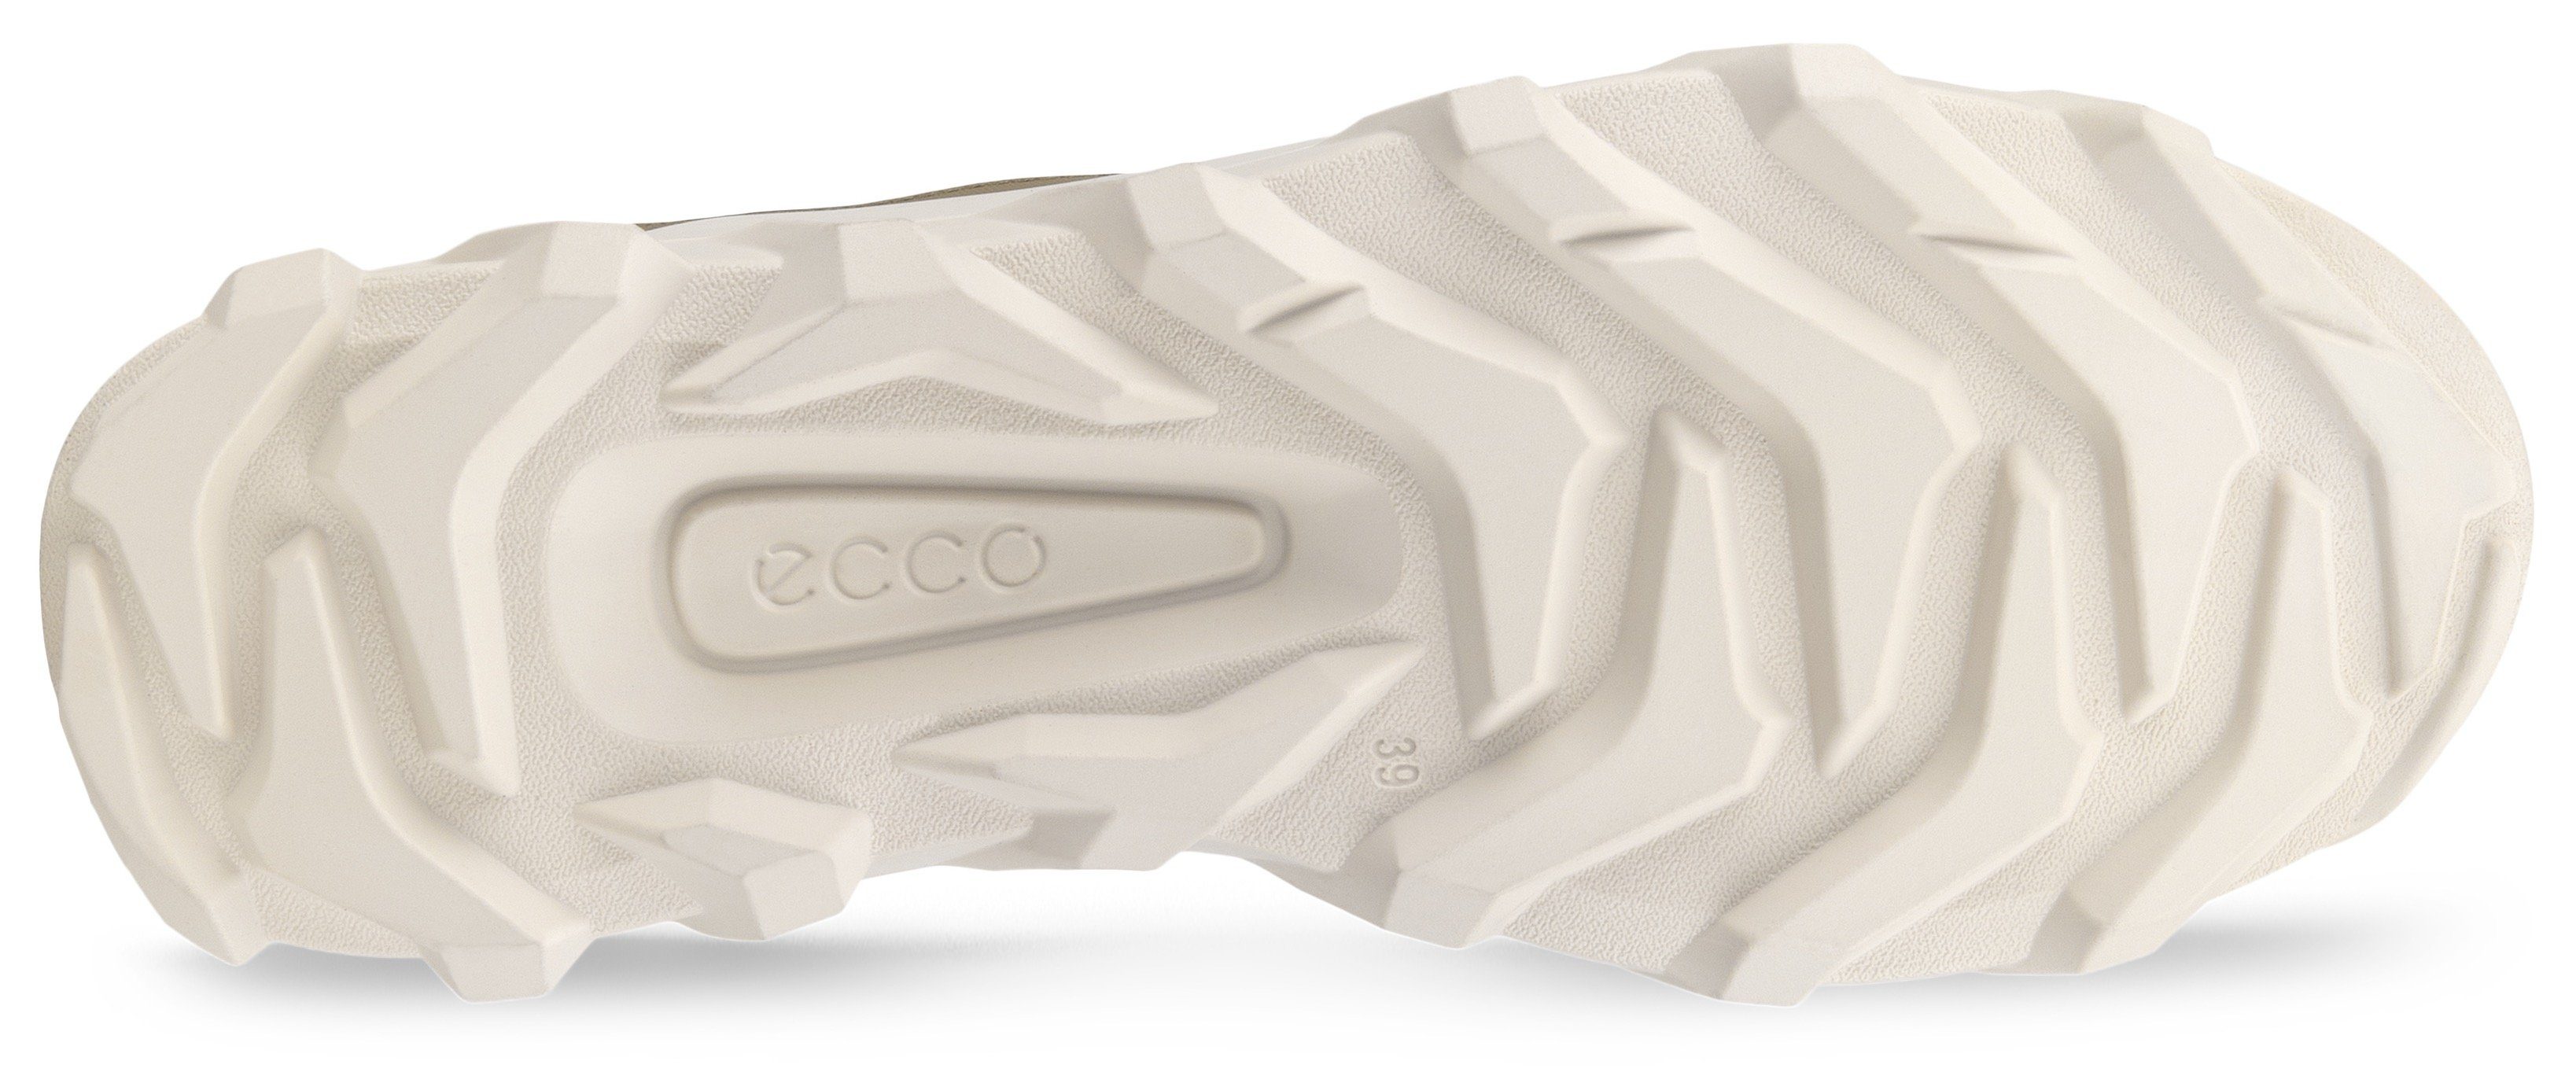 Ecco MX Sneaker mit winddichter GORE-TEX Membran beige W